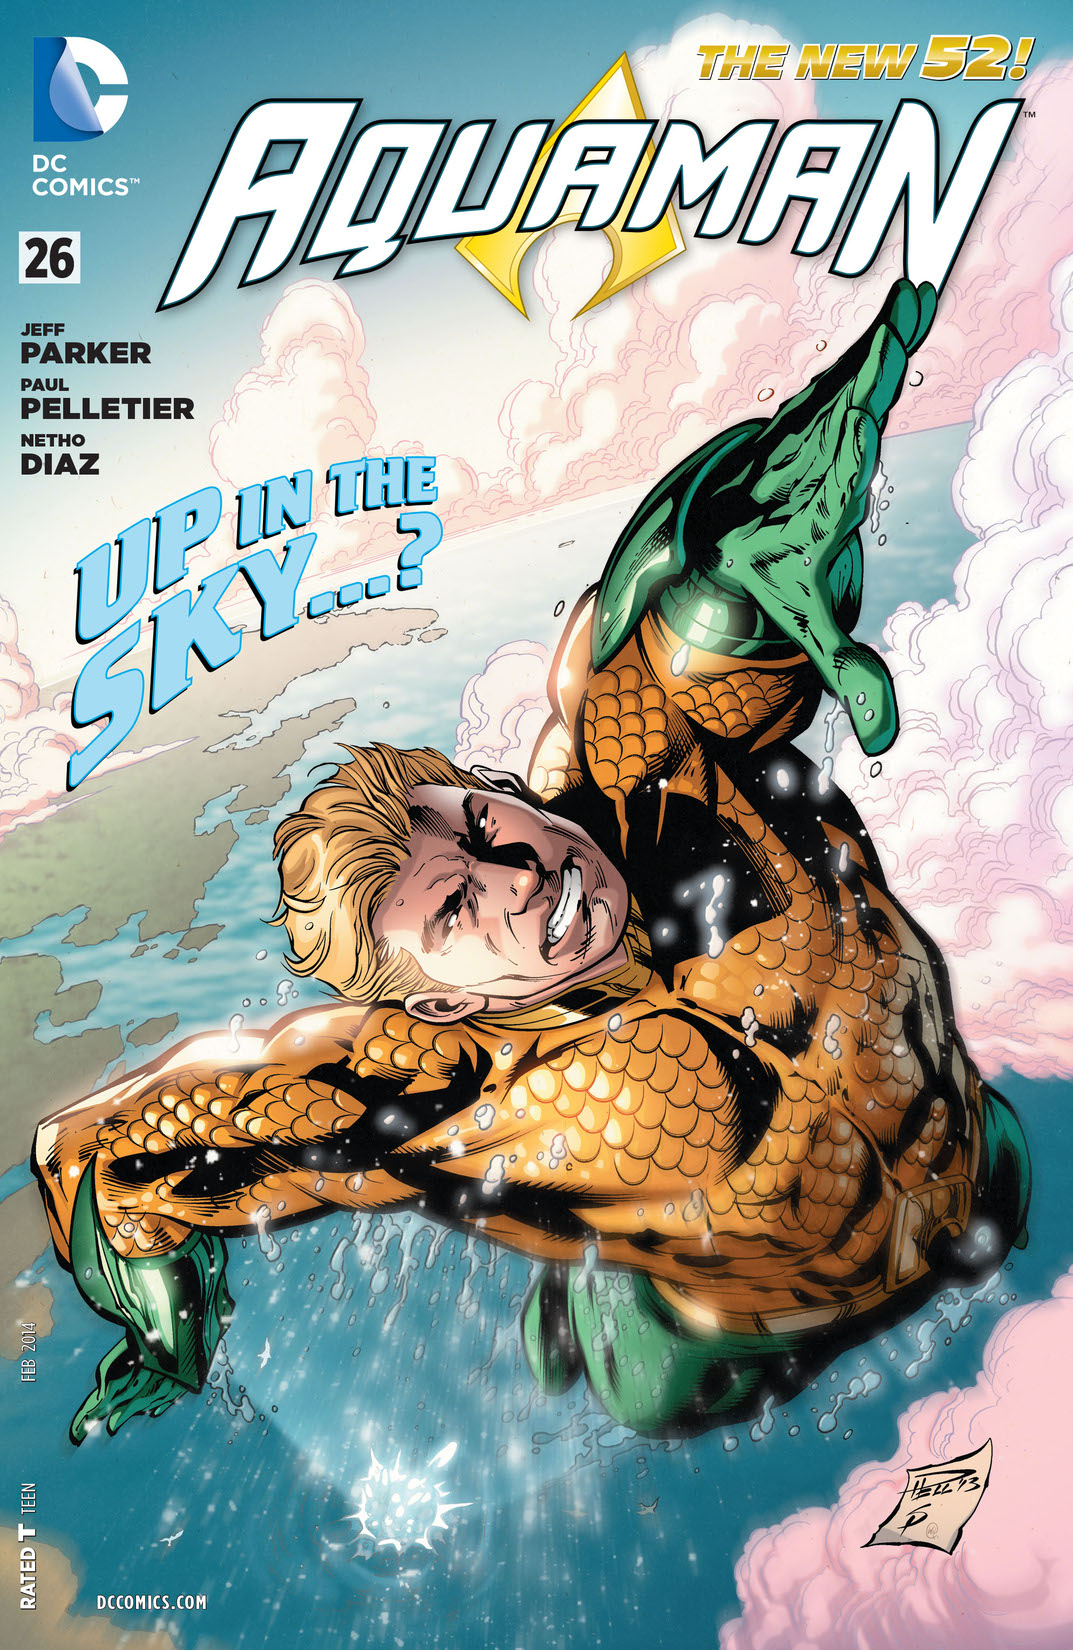 Aquaman (2011-) #26 preview images